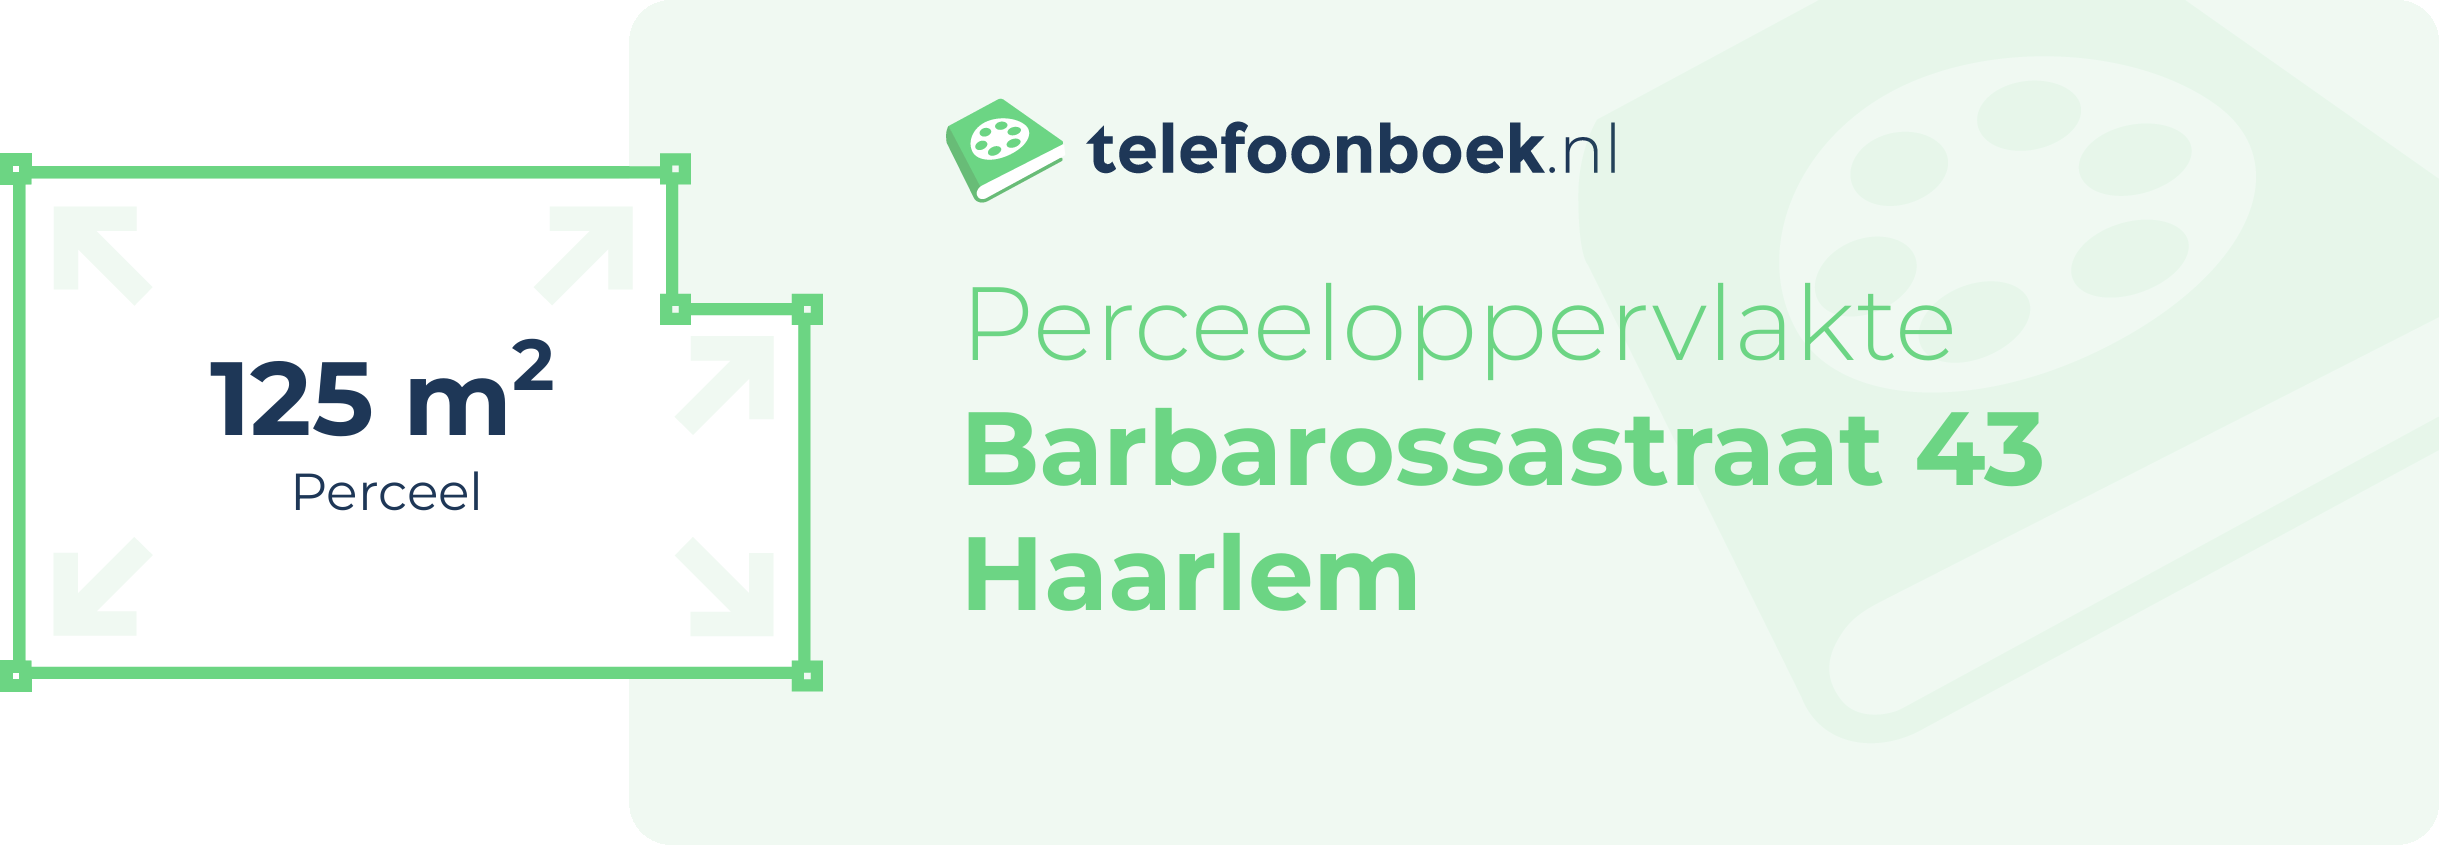 Perceeloppervlakte Barbarossastraat 43 Haarlem